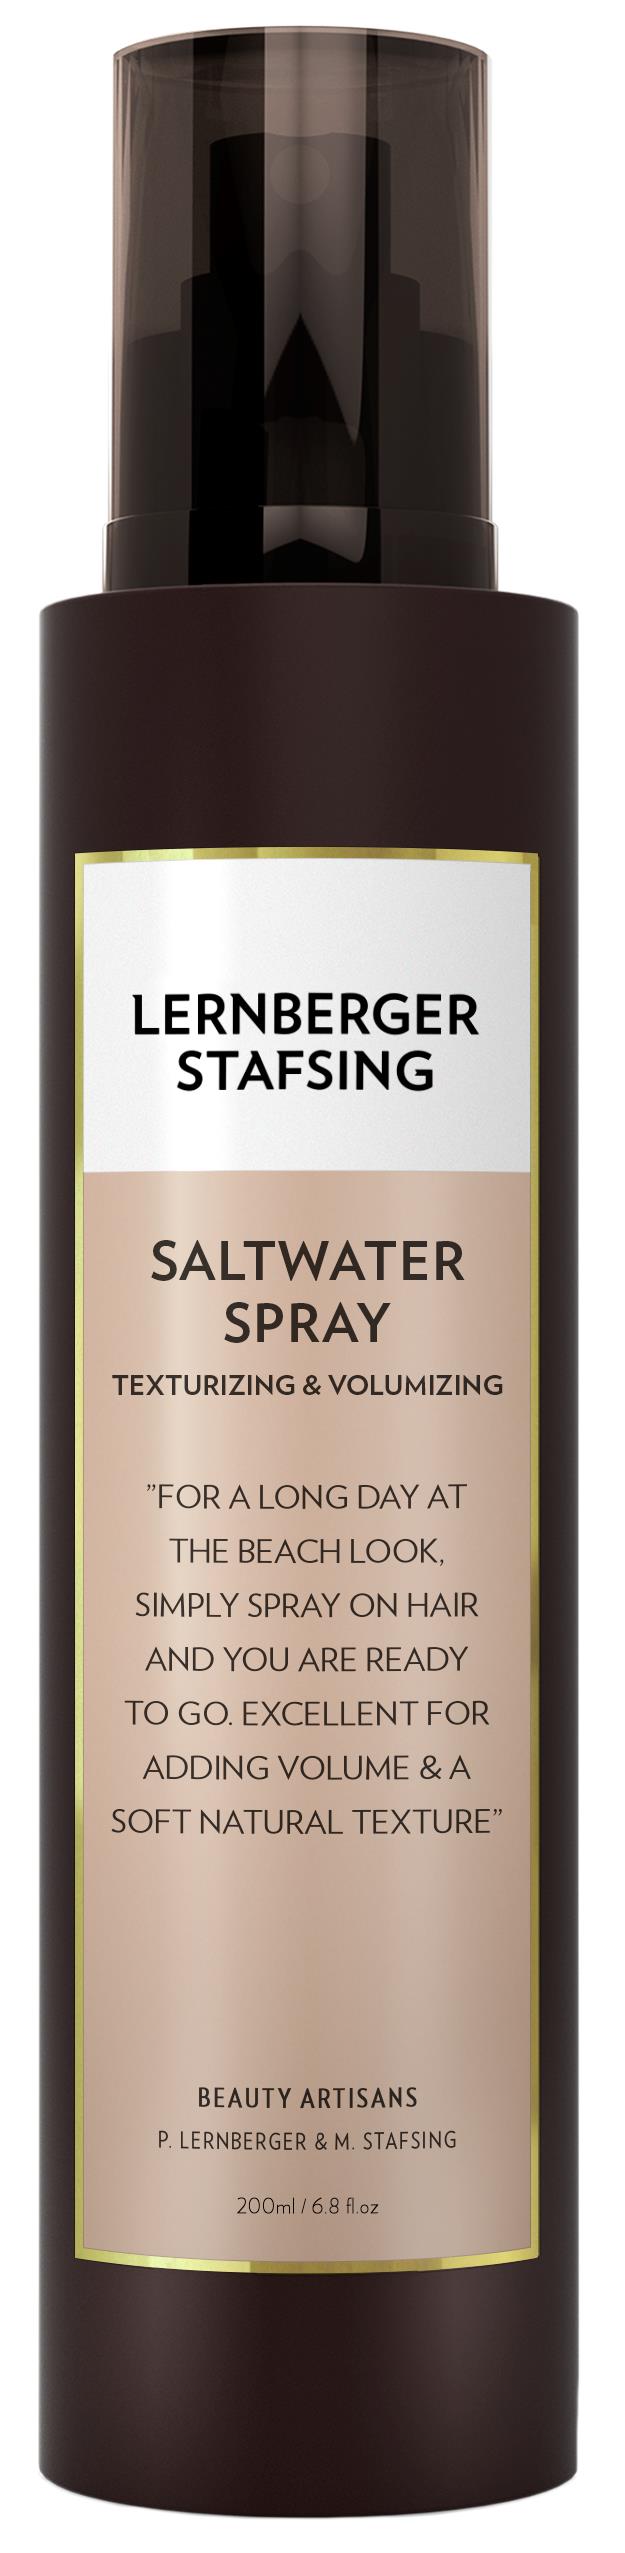 Billede af Lernberger Stafsing Saltwater Spray 200 ml hos Staybeautiful